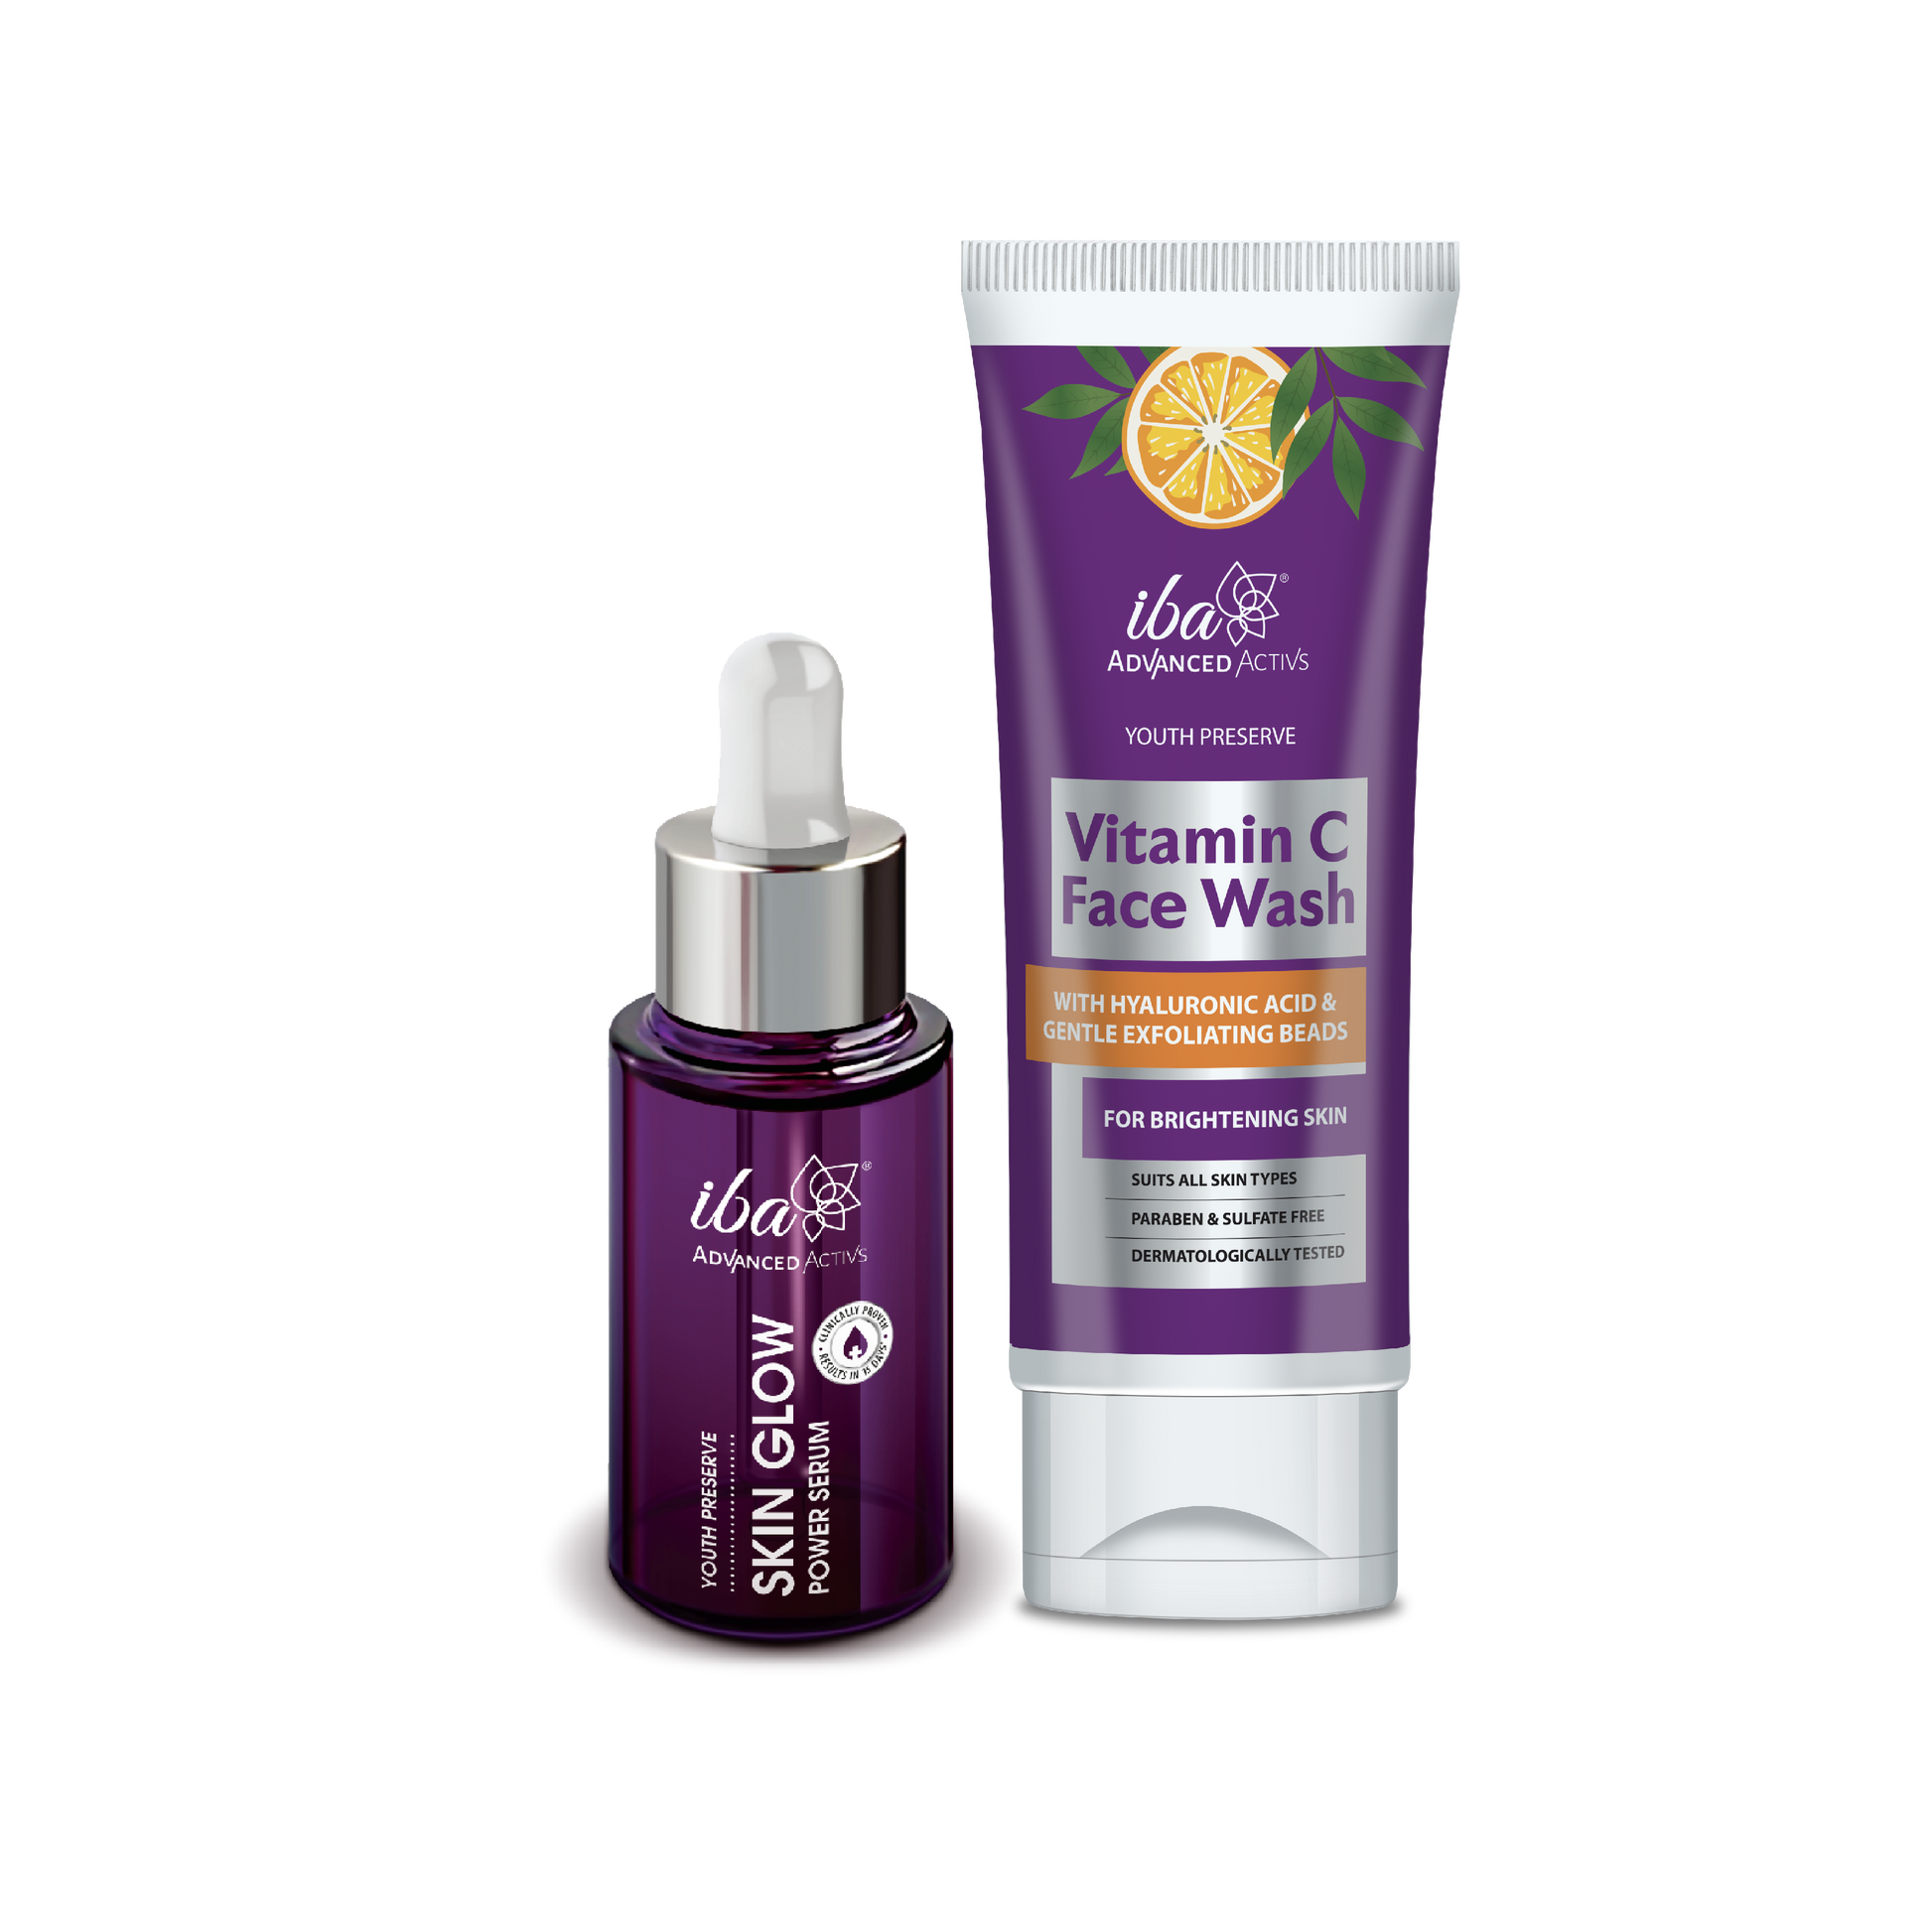 Iba Advanced Activs Vitamin C Face Wash + Skin Glow Power Serum Combo